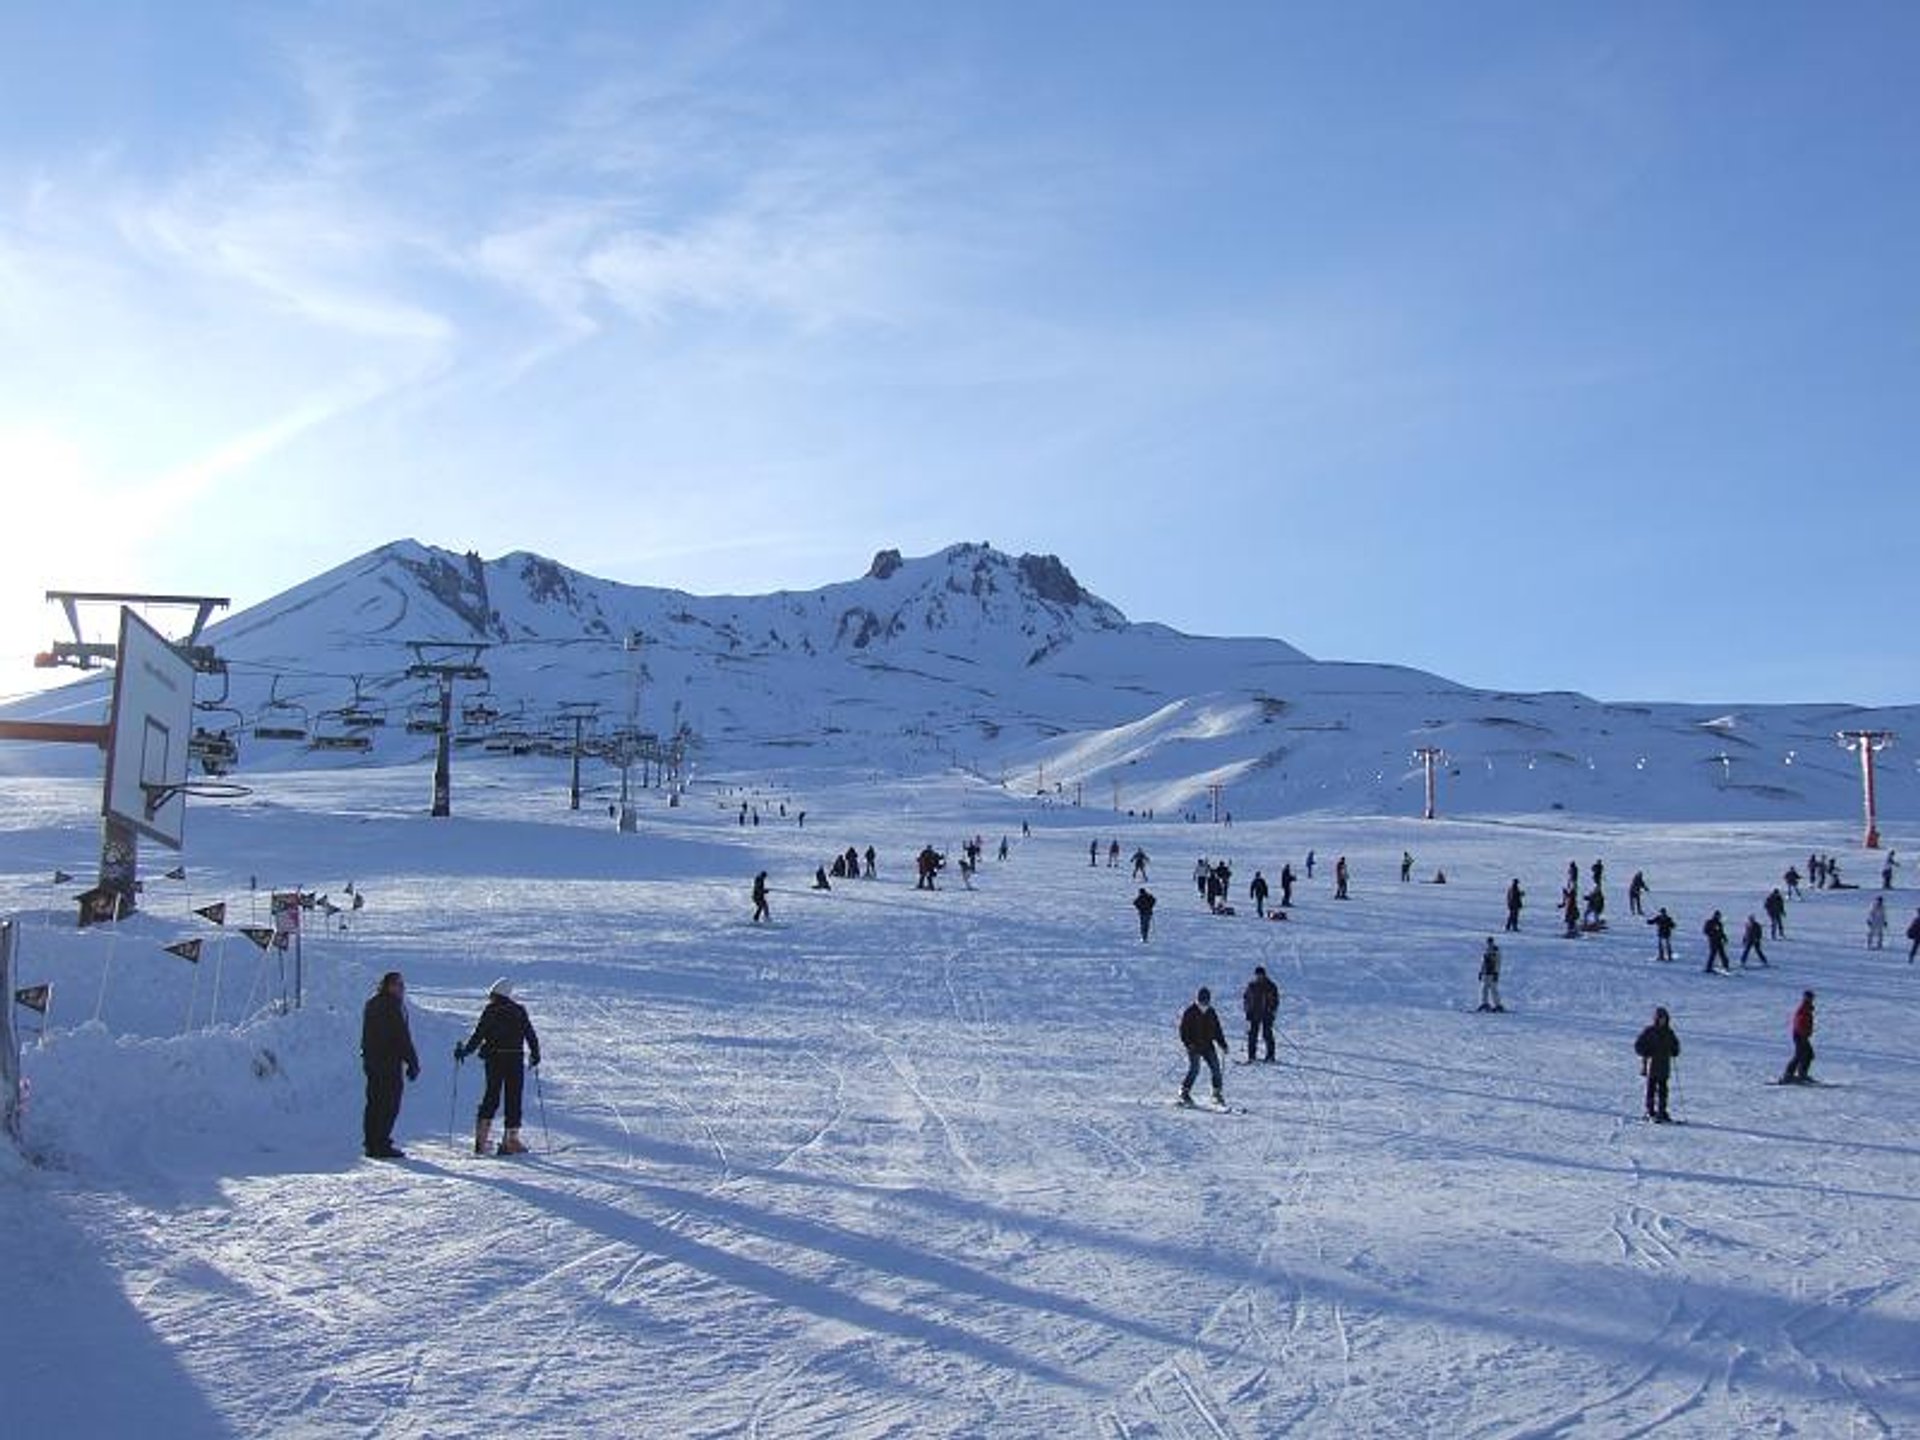 Skiing, Snowboarding and Sledding